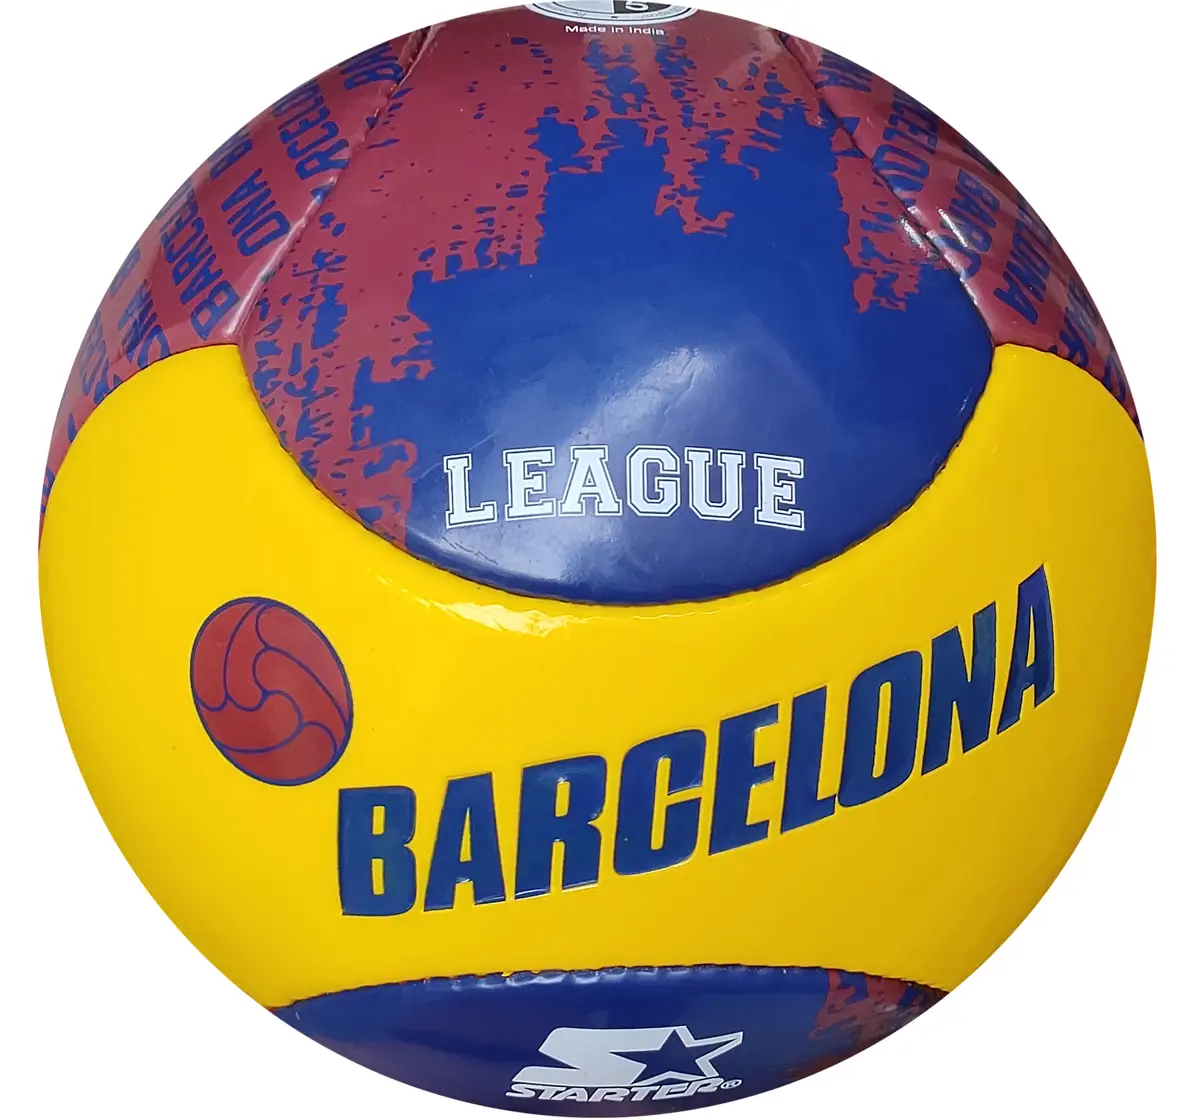 Club Football Starter L3 Size 5 - Barcelona